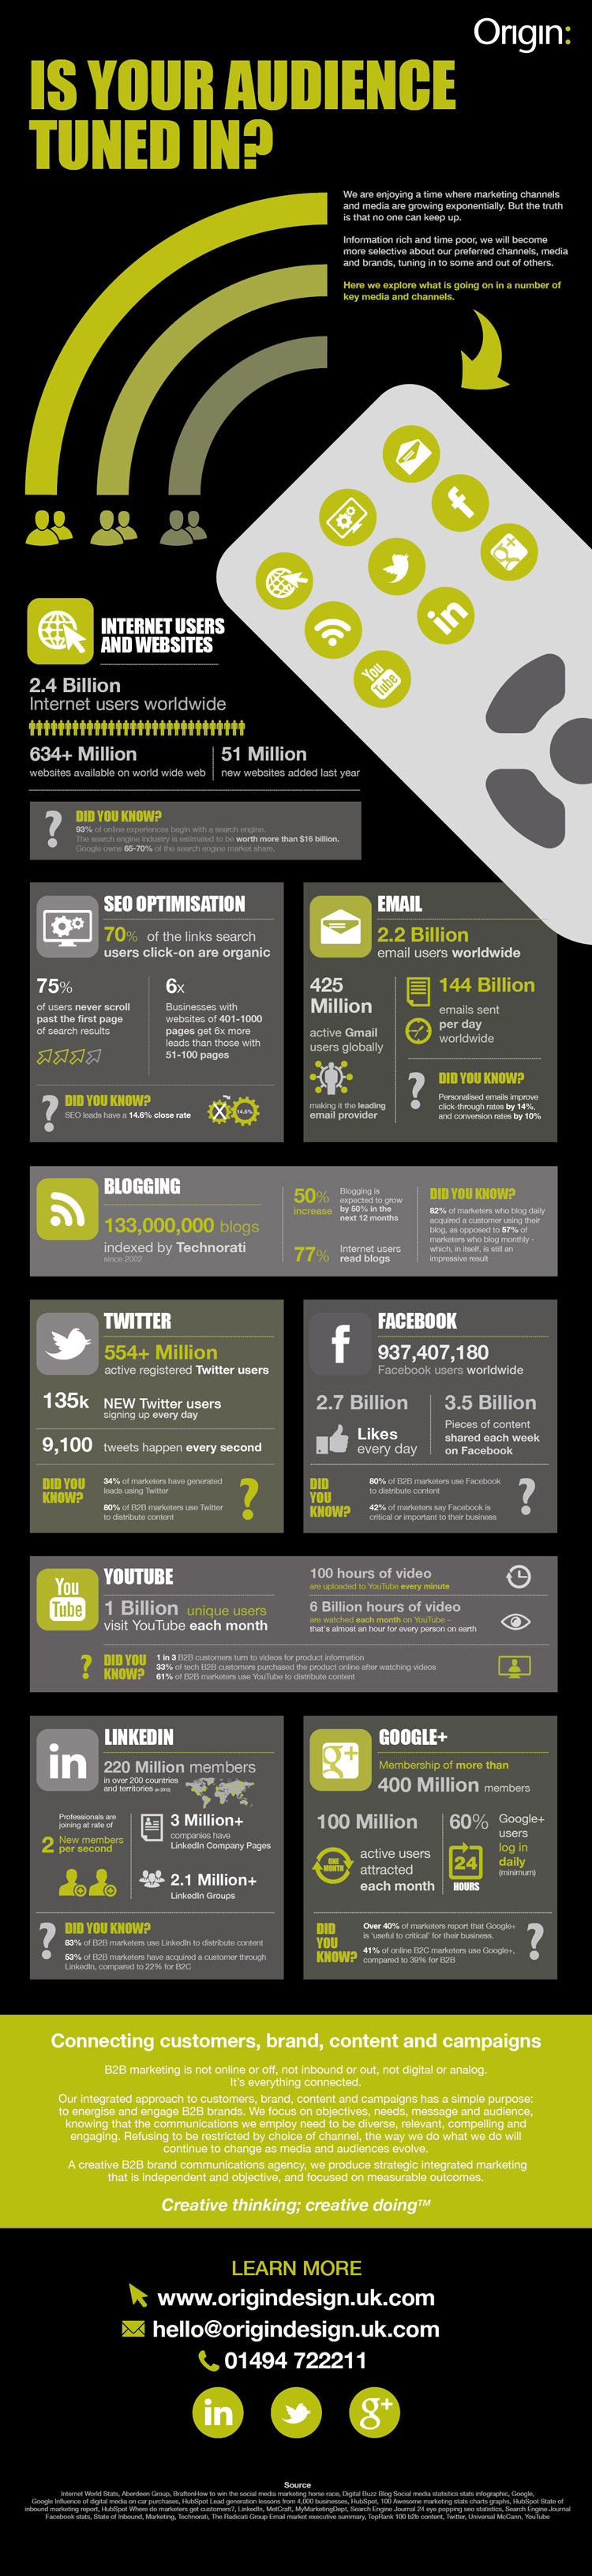 B2B Marketing channels infographic